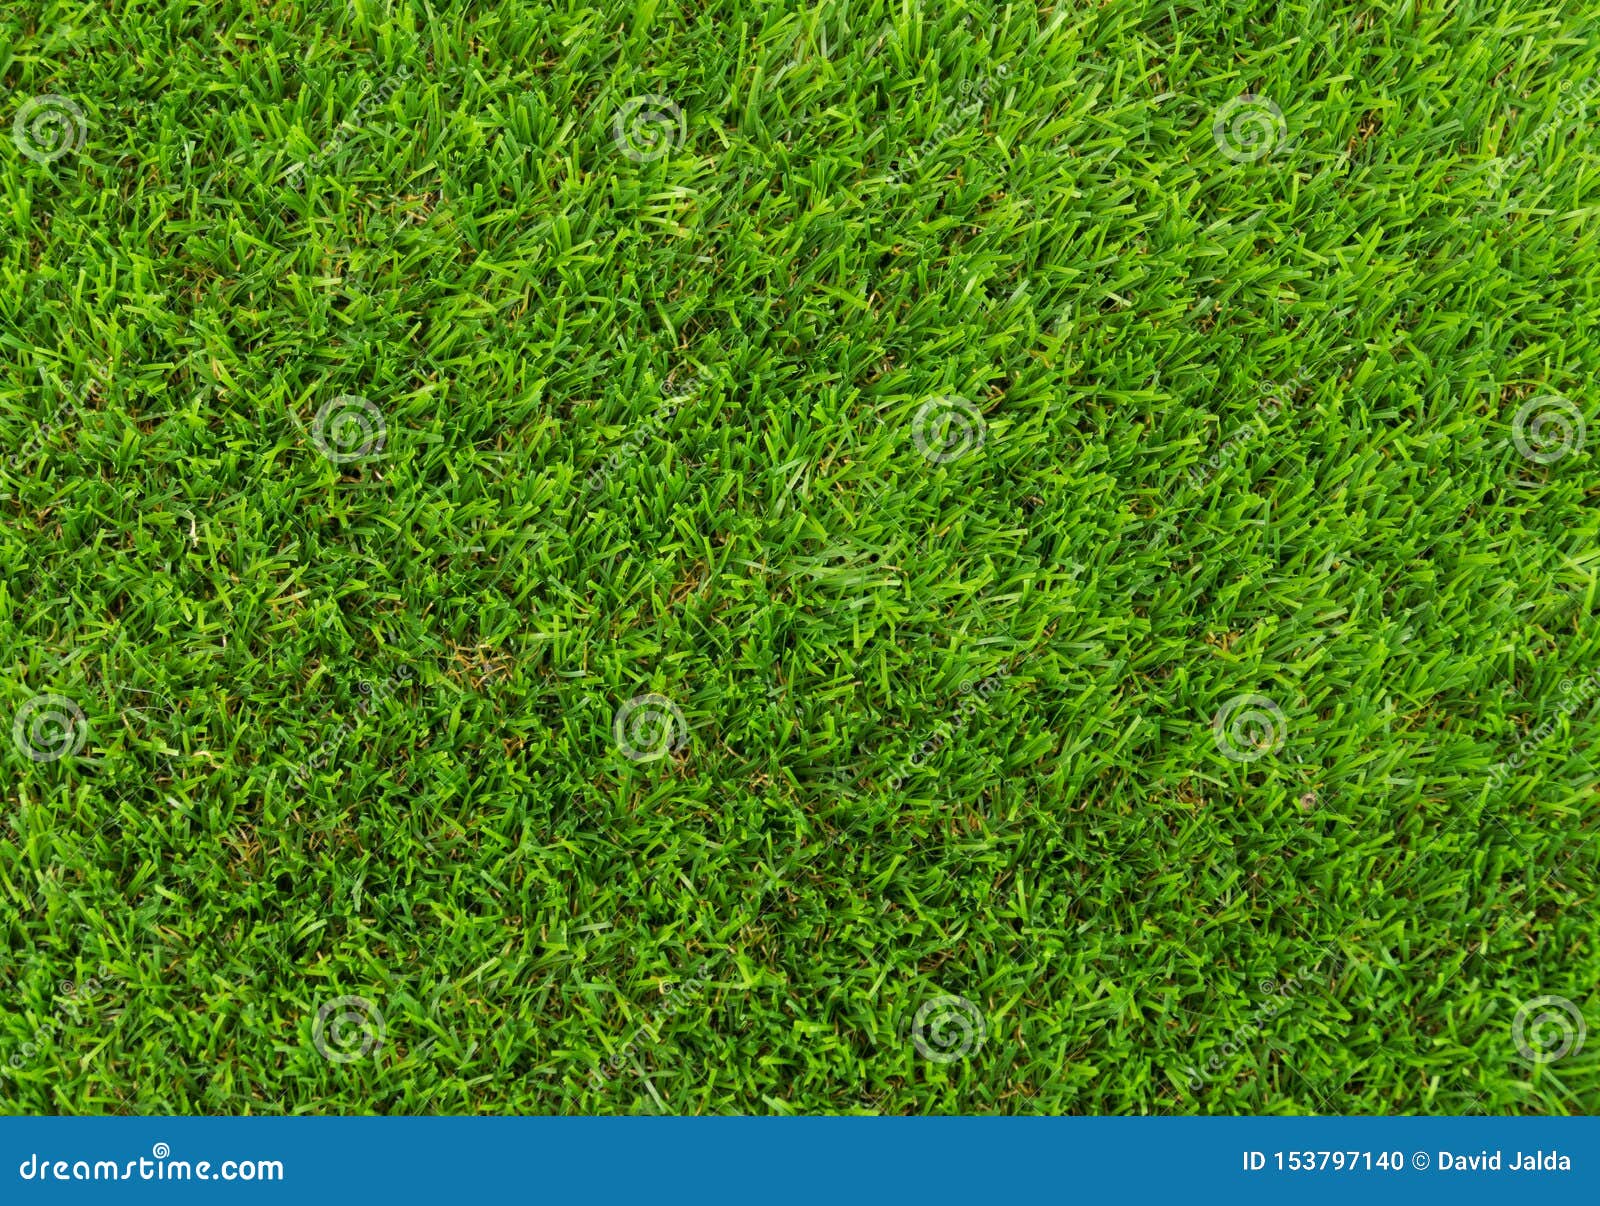 artificial grass plastic cesped